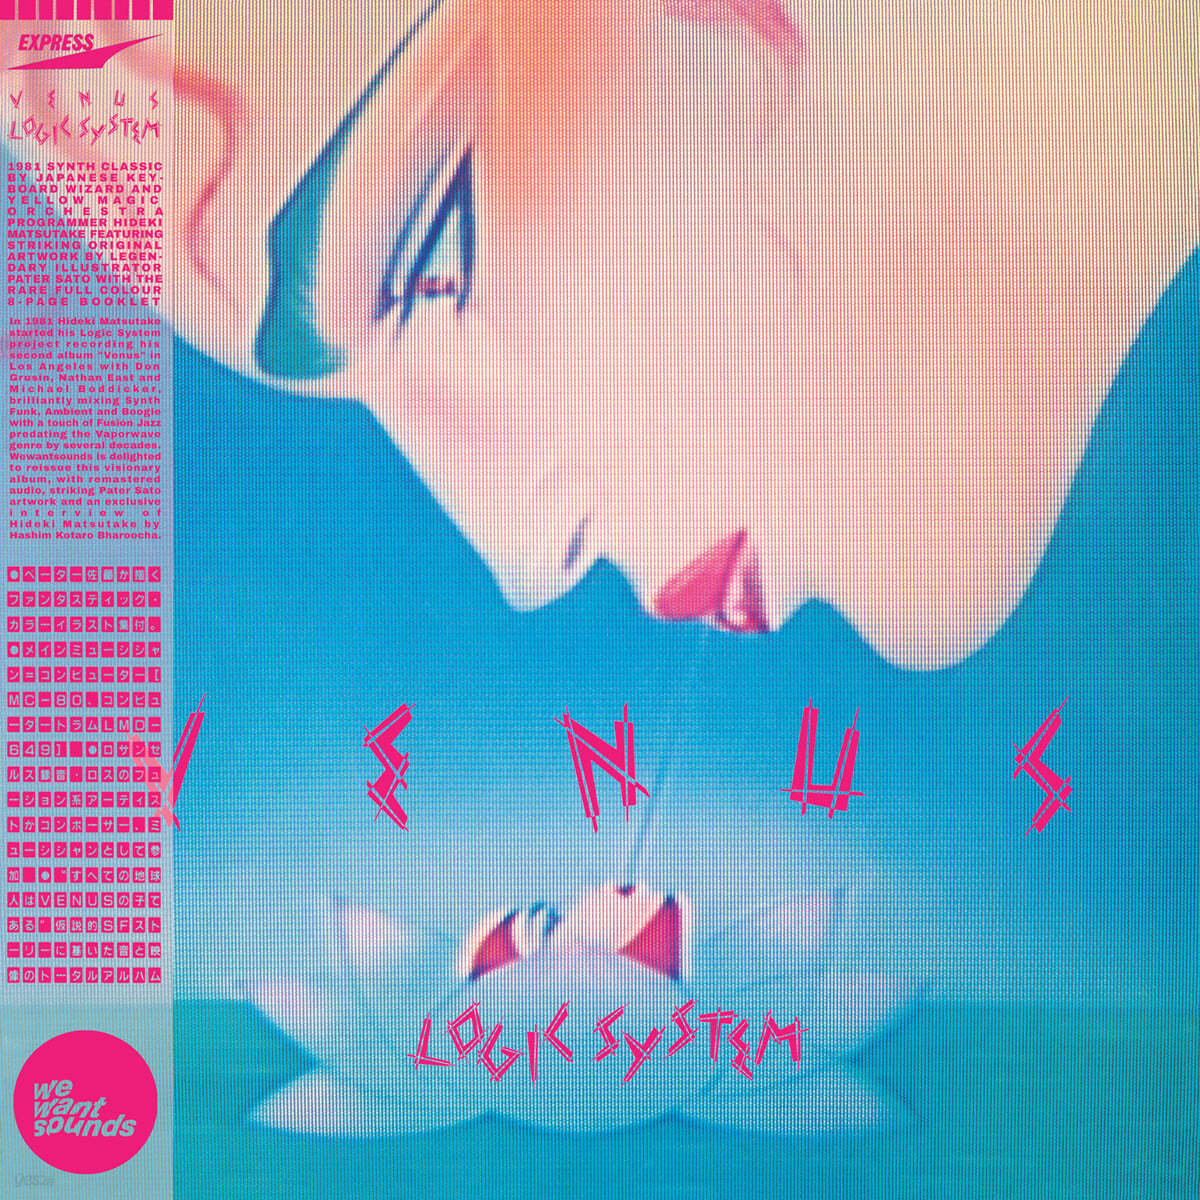 Logic System - Venus [LP] 